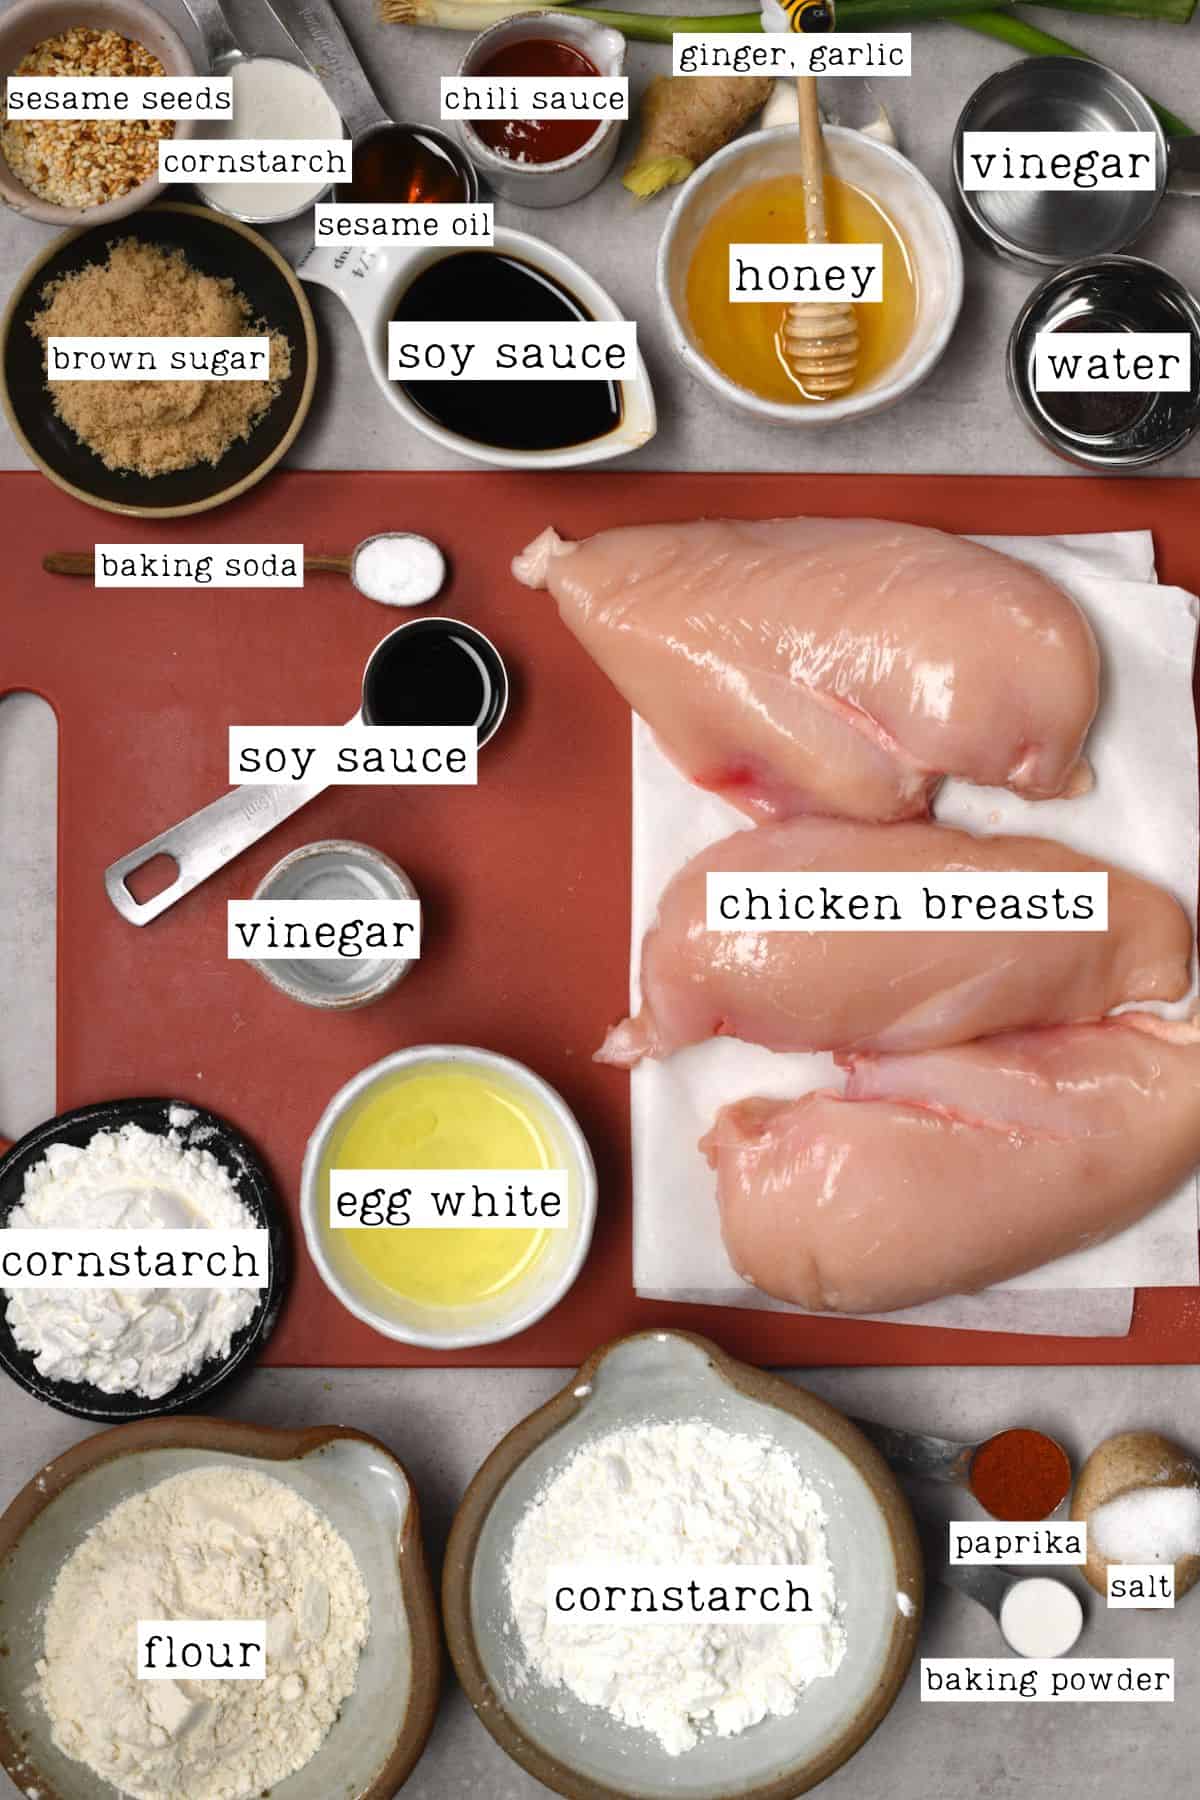 Ingredients for sesame chicken